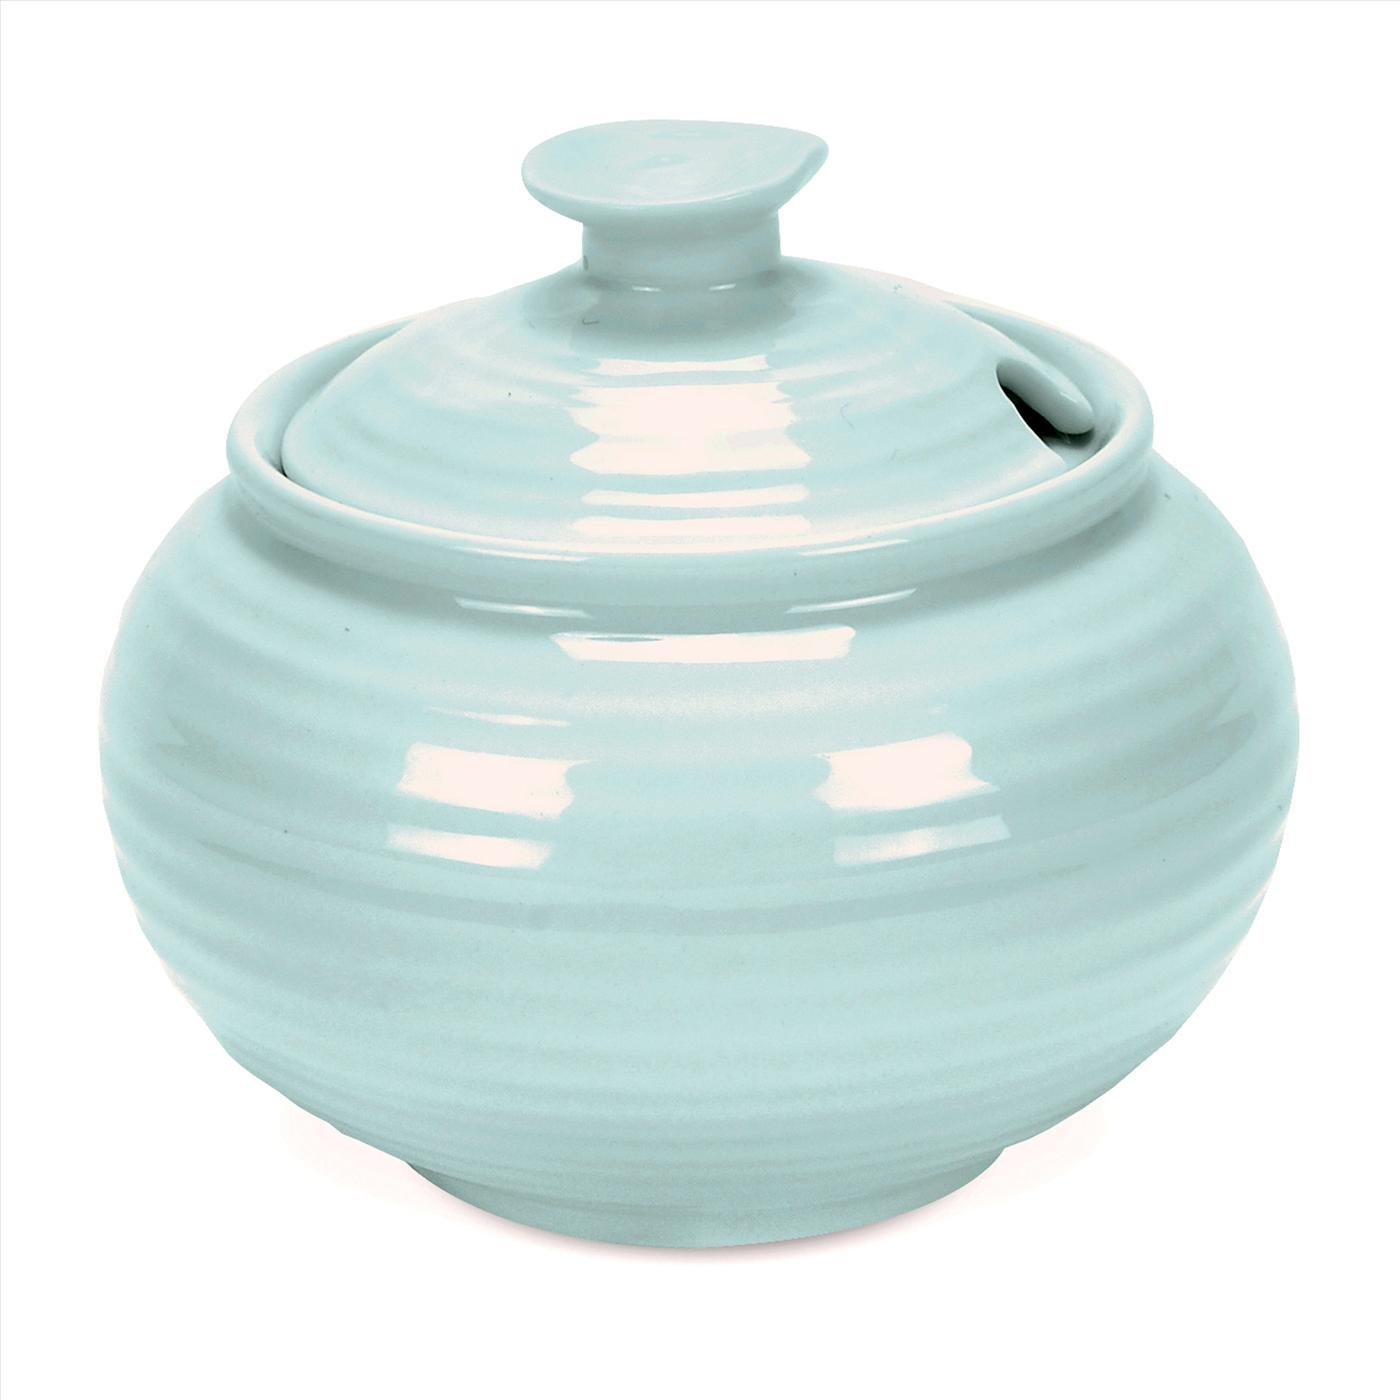 9225 - Celadon Covered Sugar Bowl - $30- Received